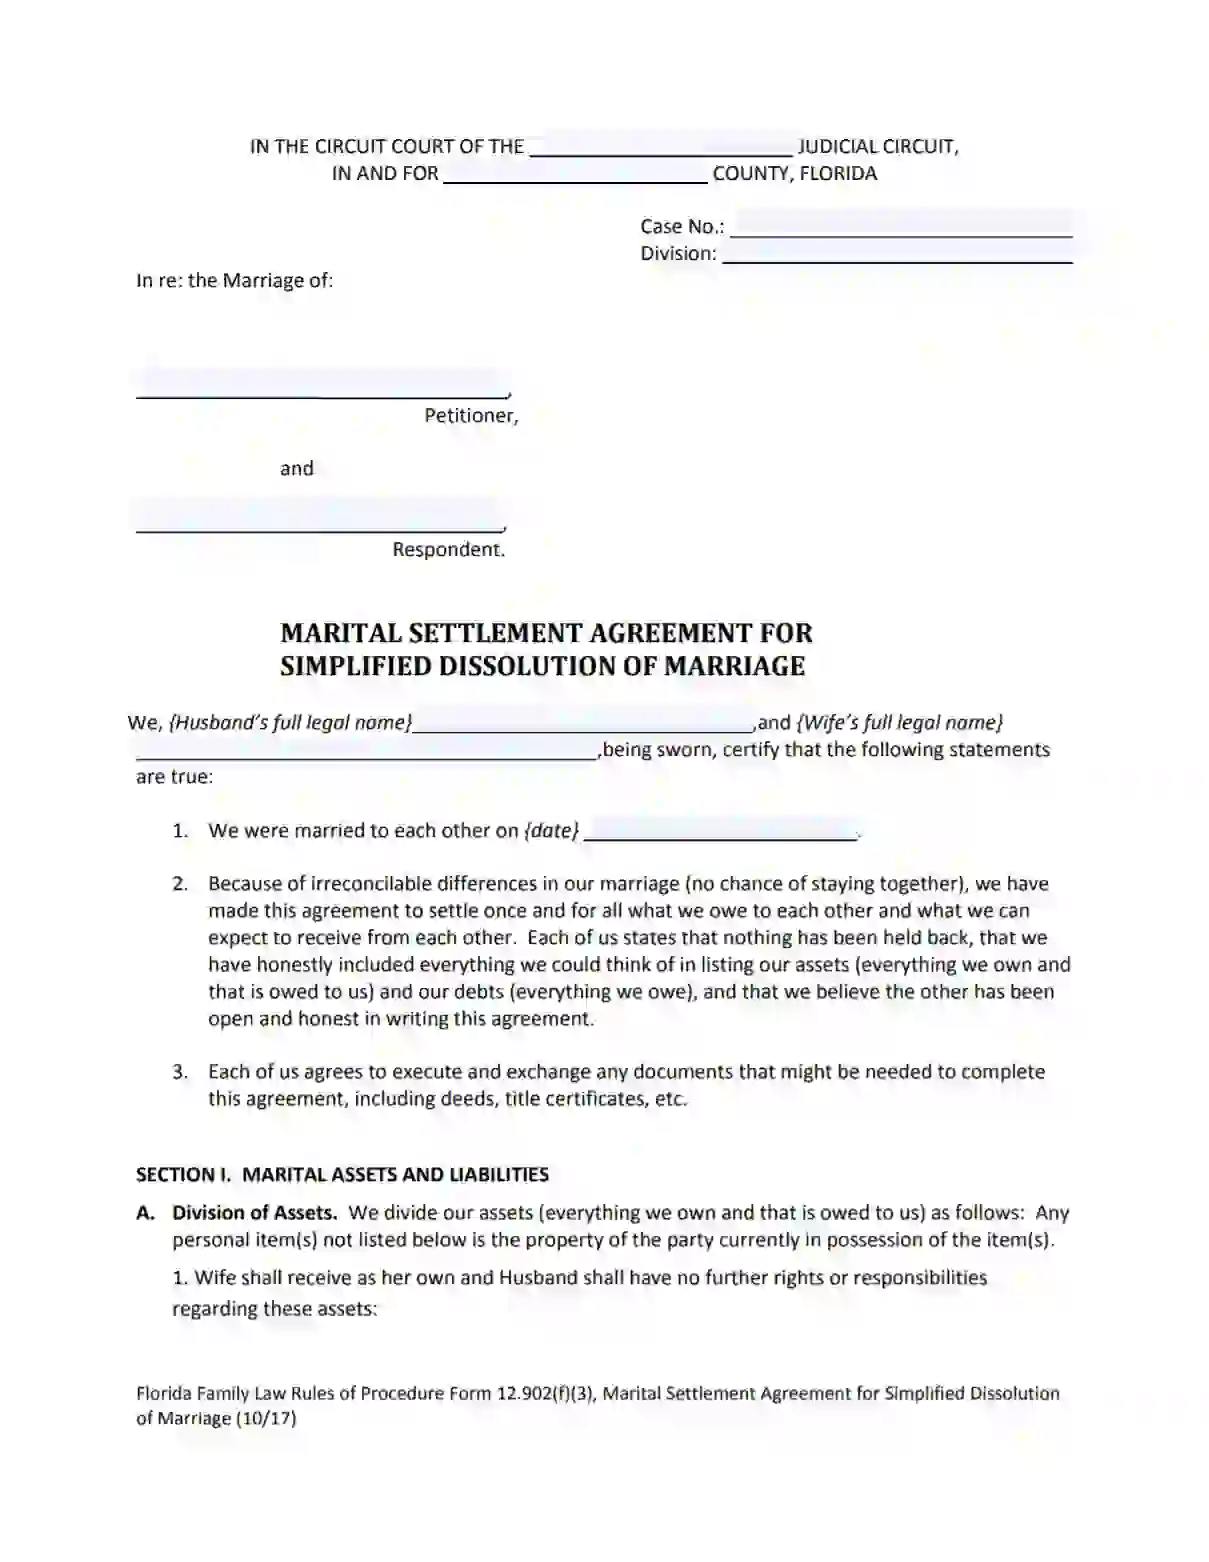 Florida Divorce (Marital) Settlement Agreement Form [PDF] Pertaining To negotiated settlement agreement sample